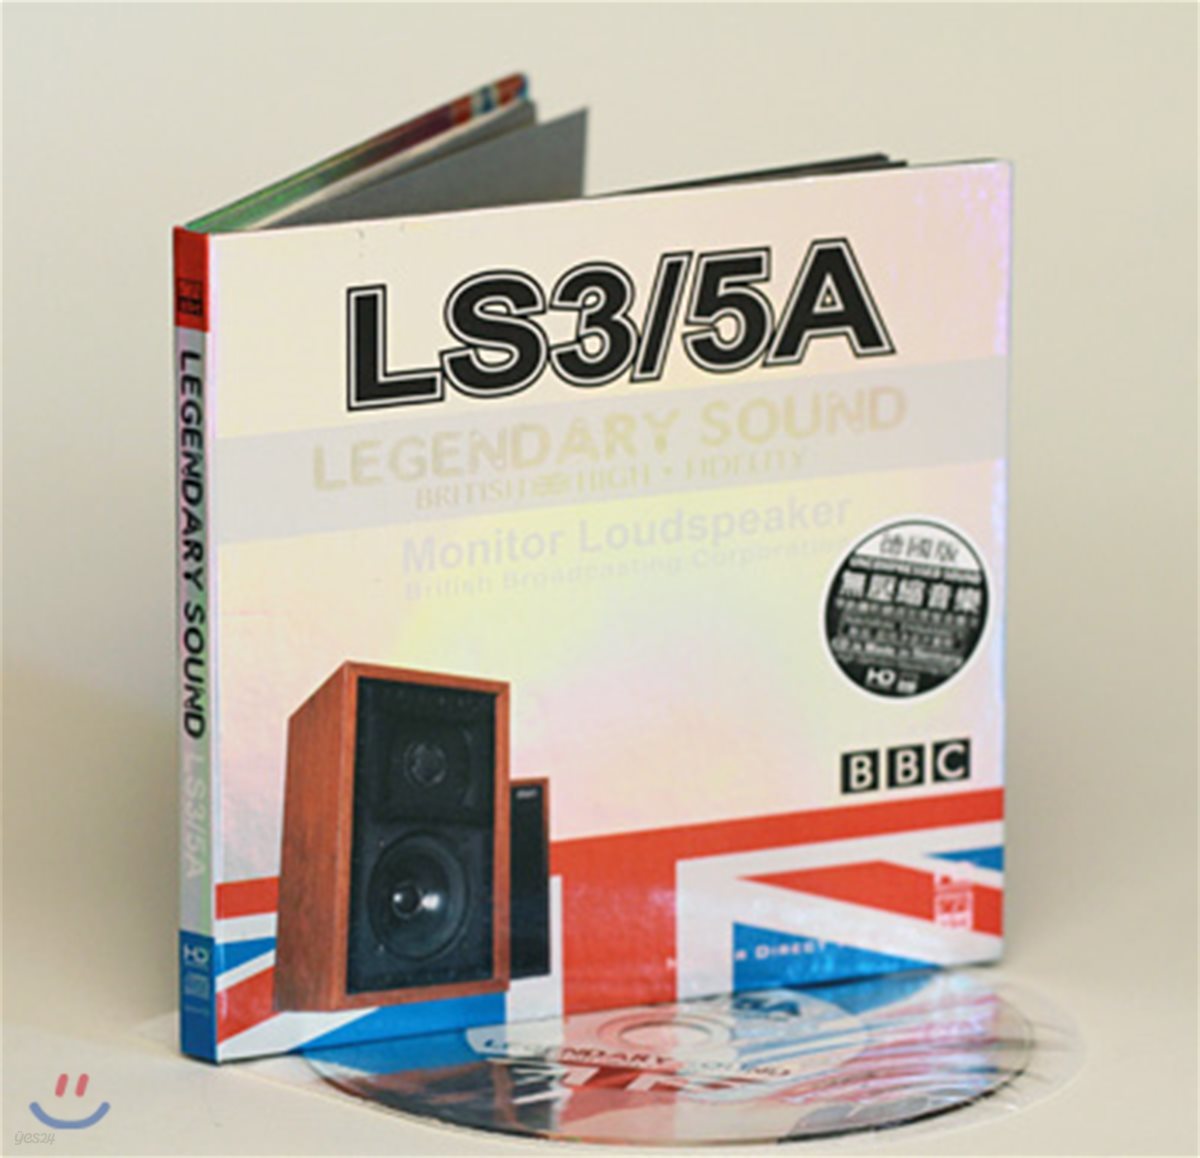 BBC 팔콘어쿠스틱 LS3/5a 스피커 사운드 (LS3/5A Legendary Sound)